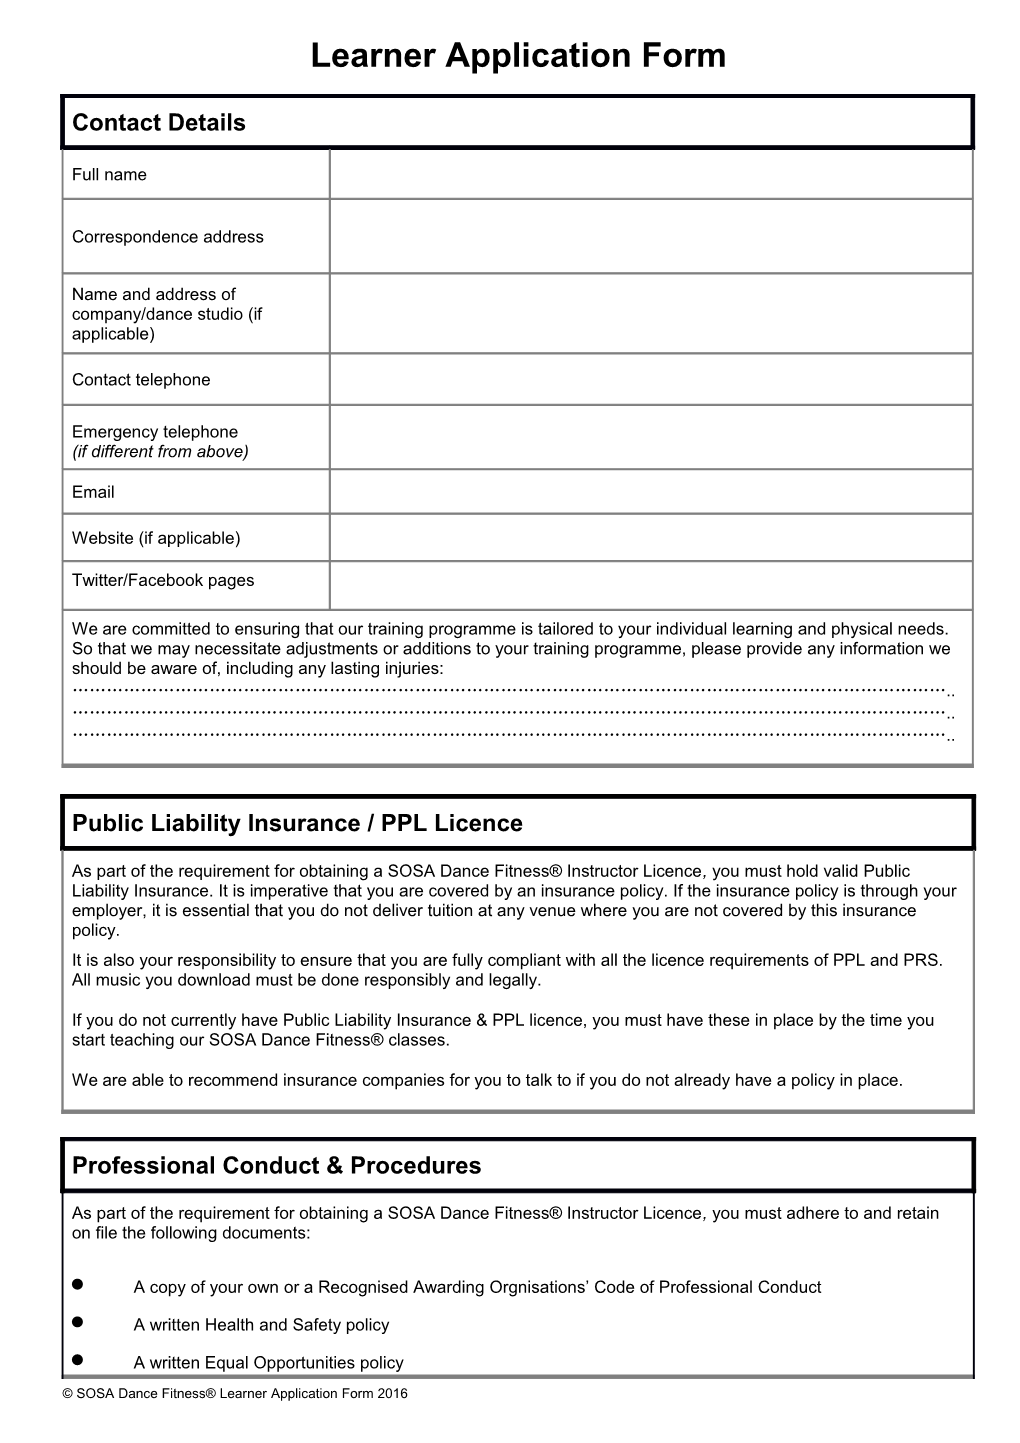 Learner Application Form